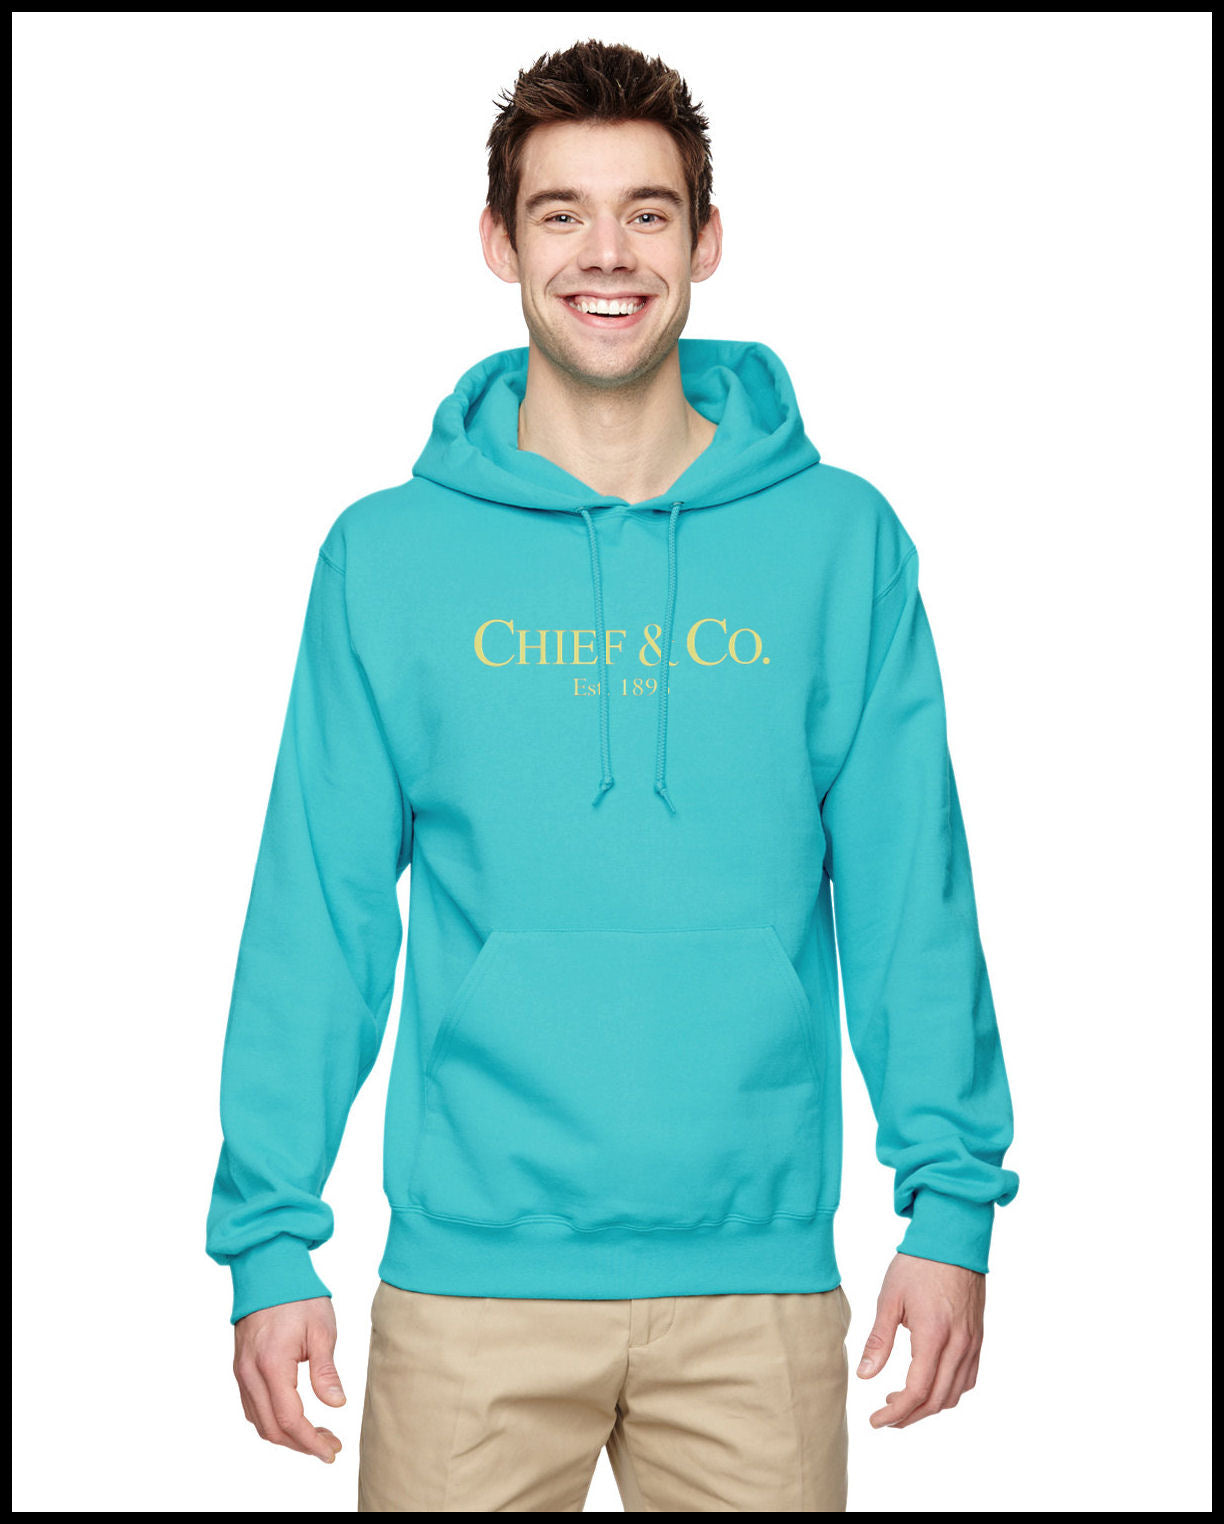 Chief & Co. Tahiti Blue & Cream Hooded Sweatshirt